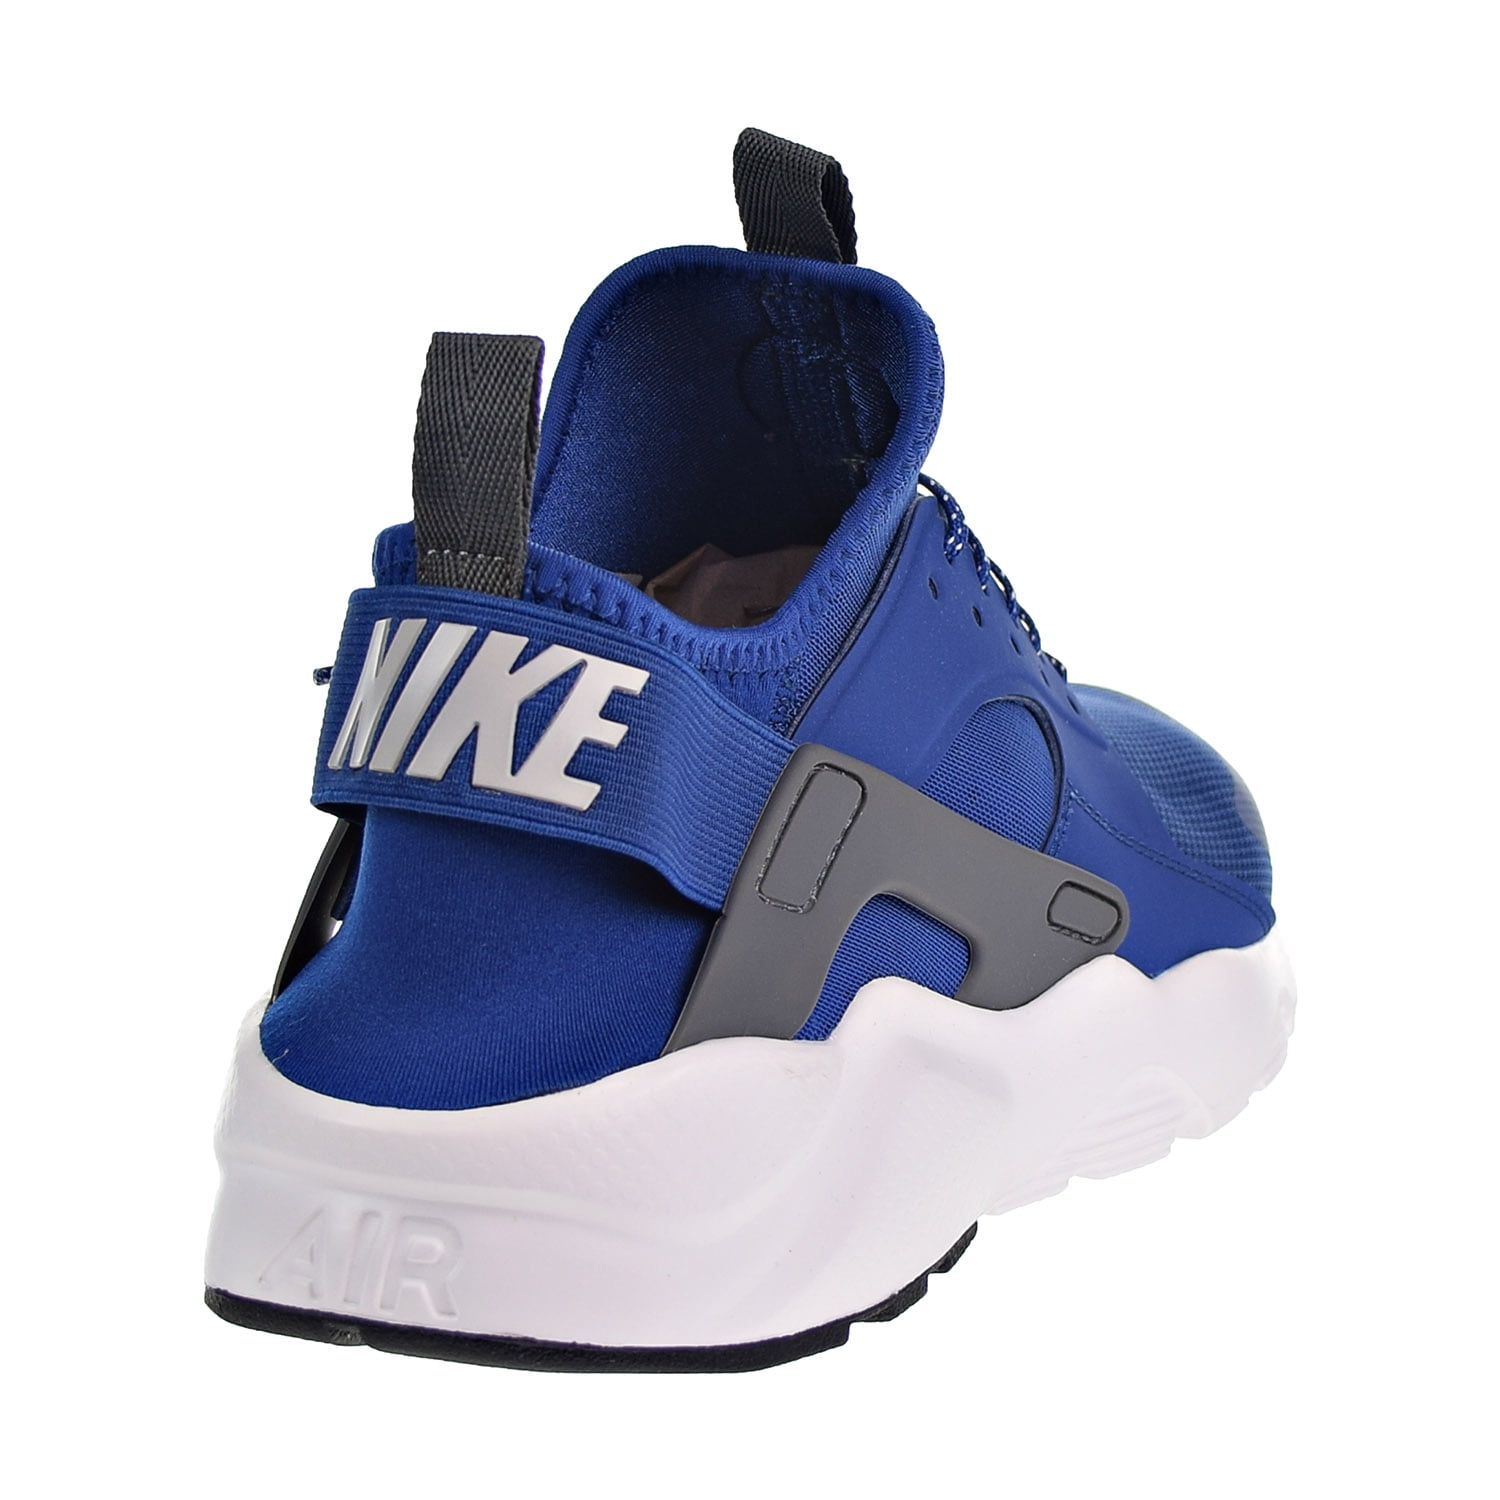 Nike Huarache Run Men's Running Shoes Gym Blue/Wolf 819685-411 - Walmart.com